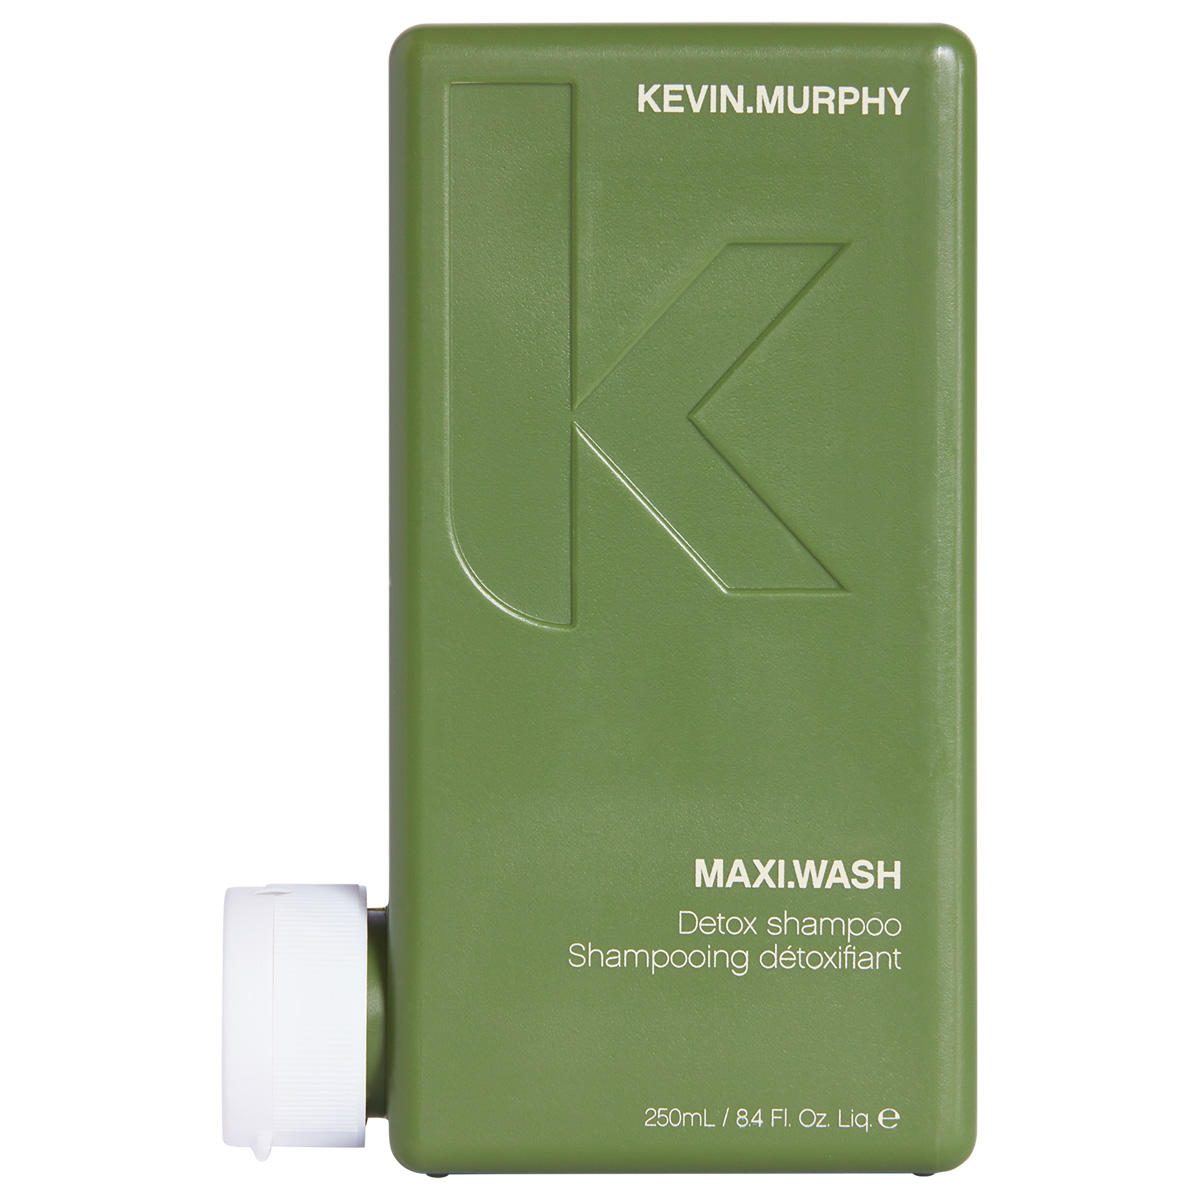 KEVIN.MURPHY MAXI Wash 250 ml - 1